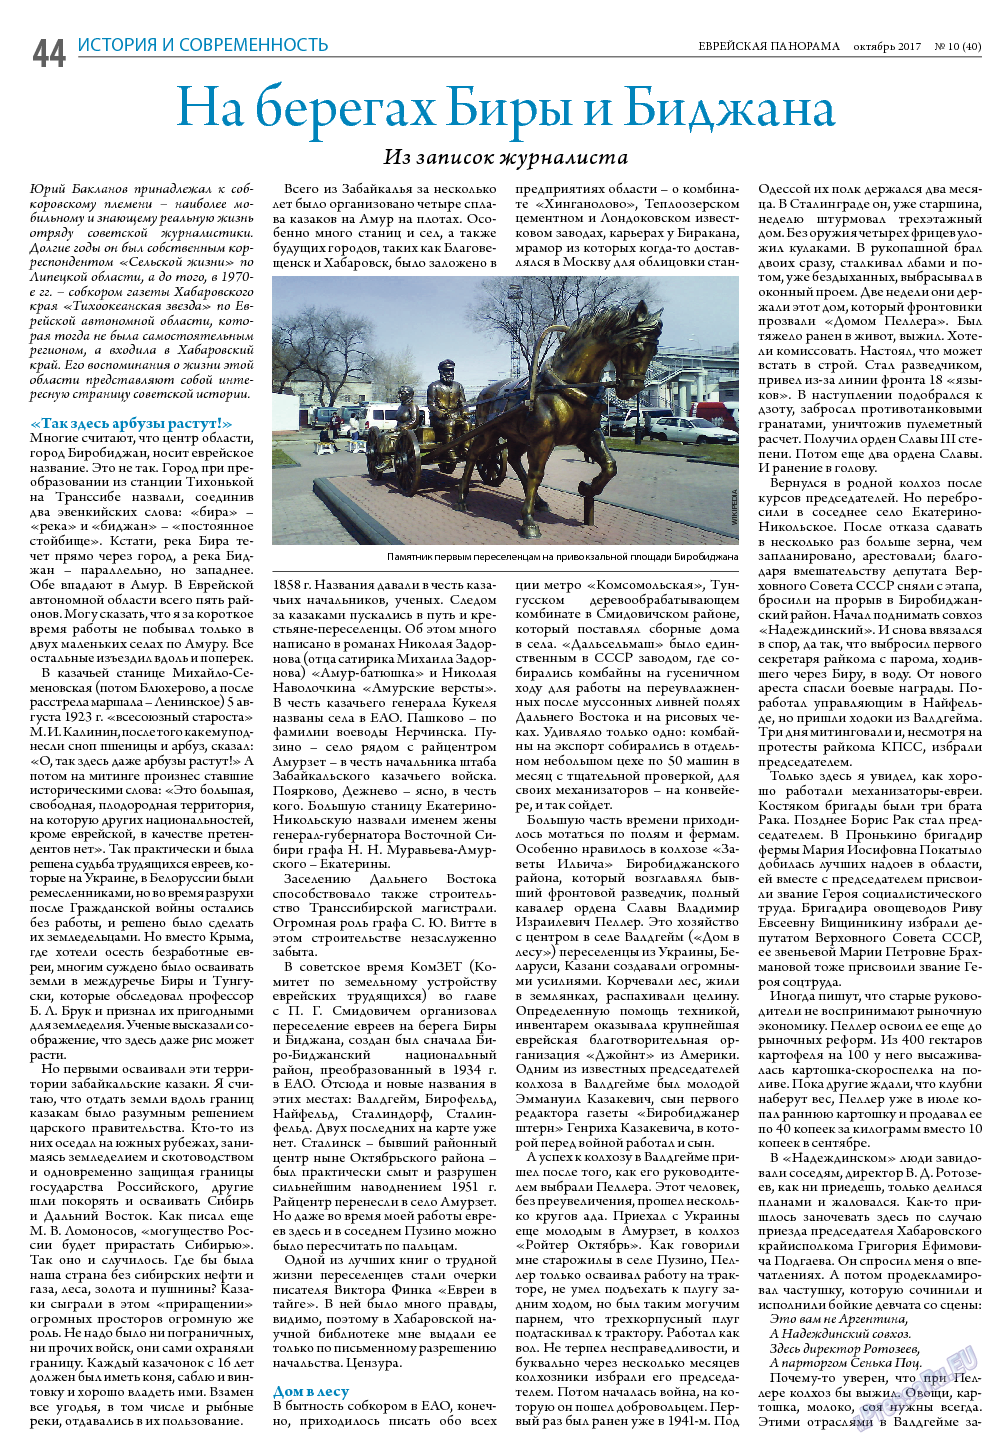 Еврейская панорама, газета. 2017 №10 стр.44